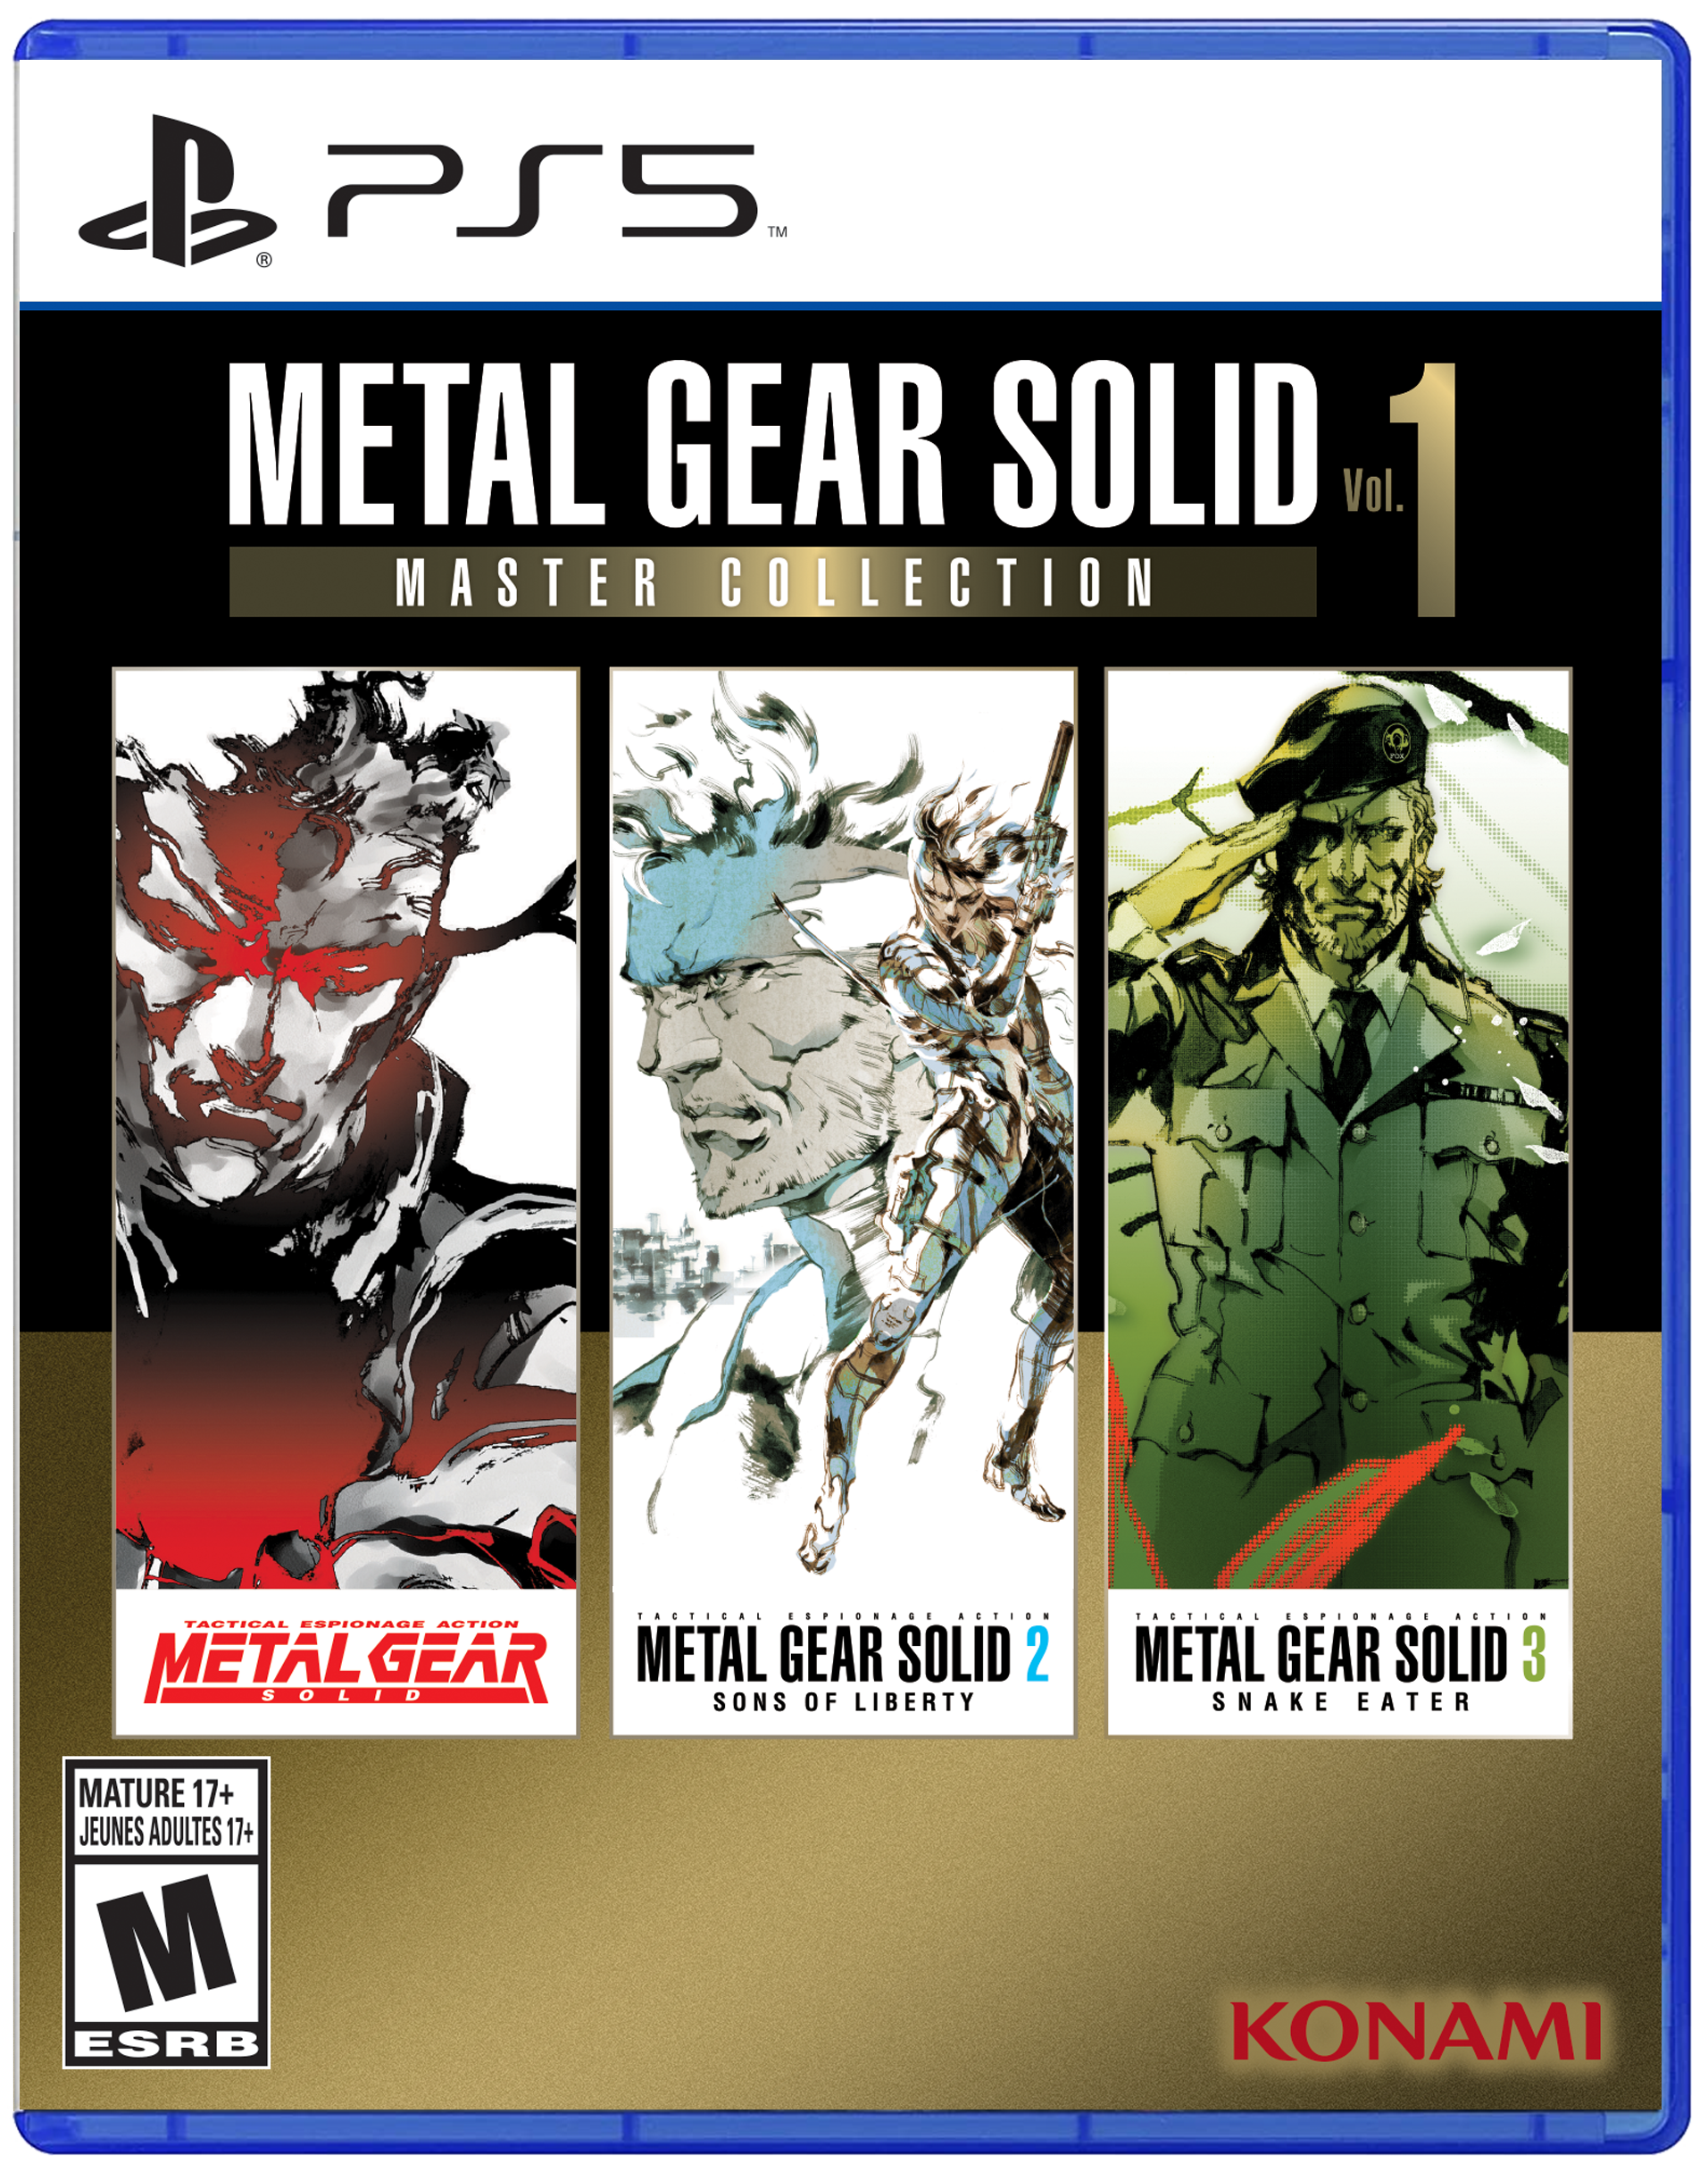 Metal Gear Solid: Master Collection Vol.1 - PS5 | PlayStation 5 | GameStop